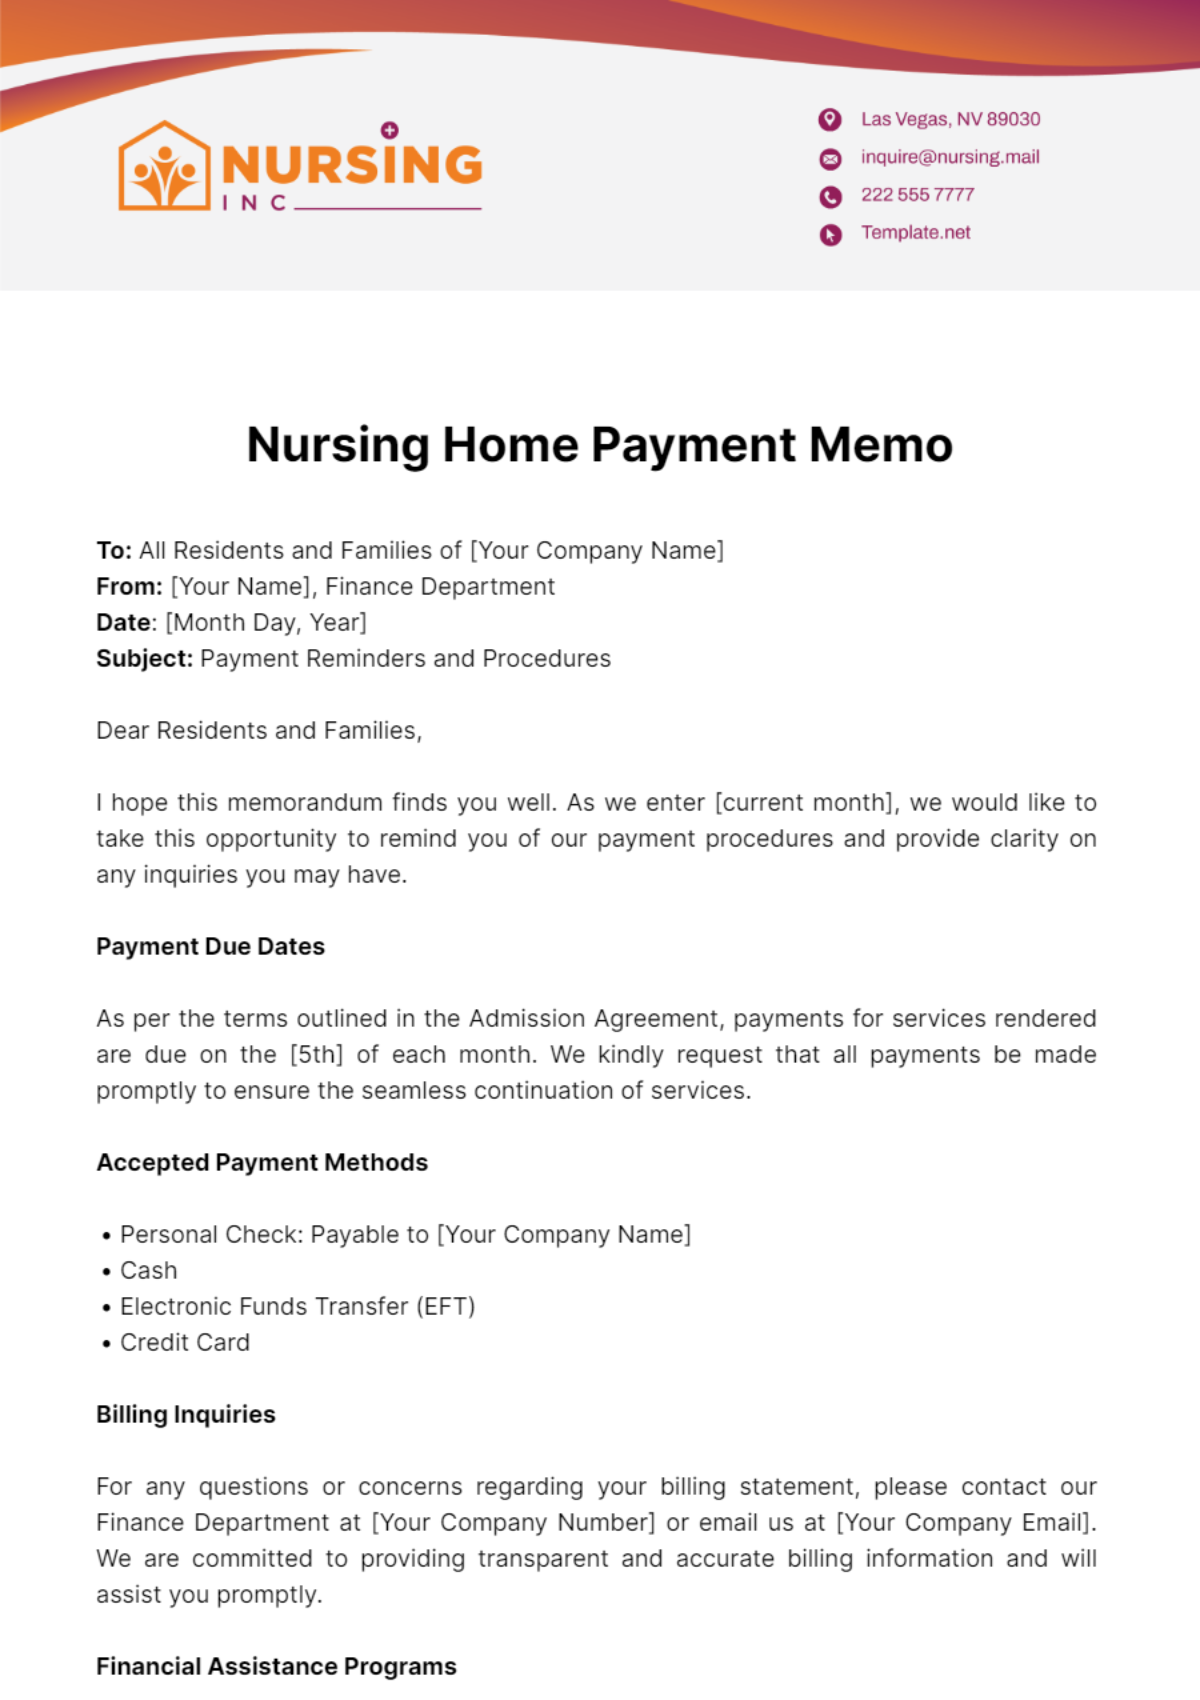 Nursing Home Payment Memo Template